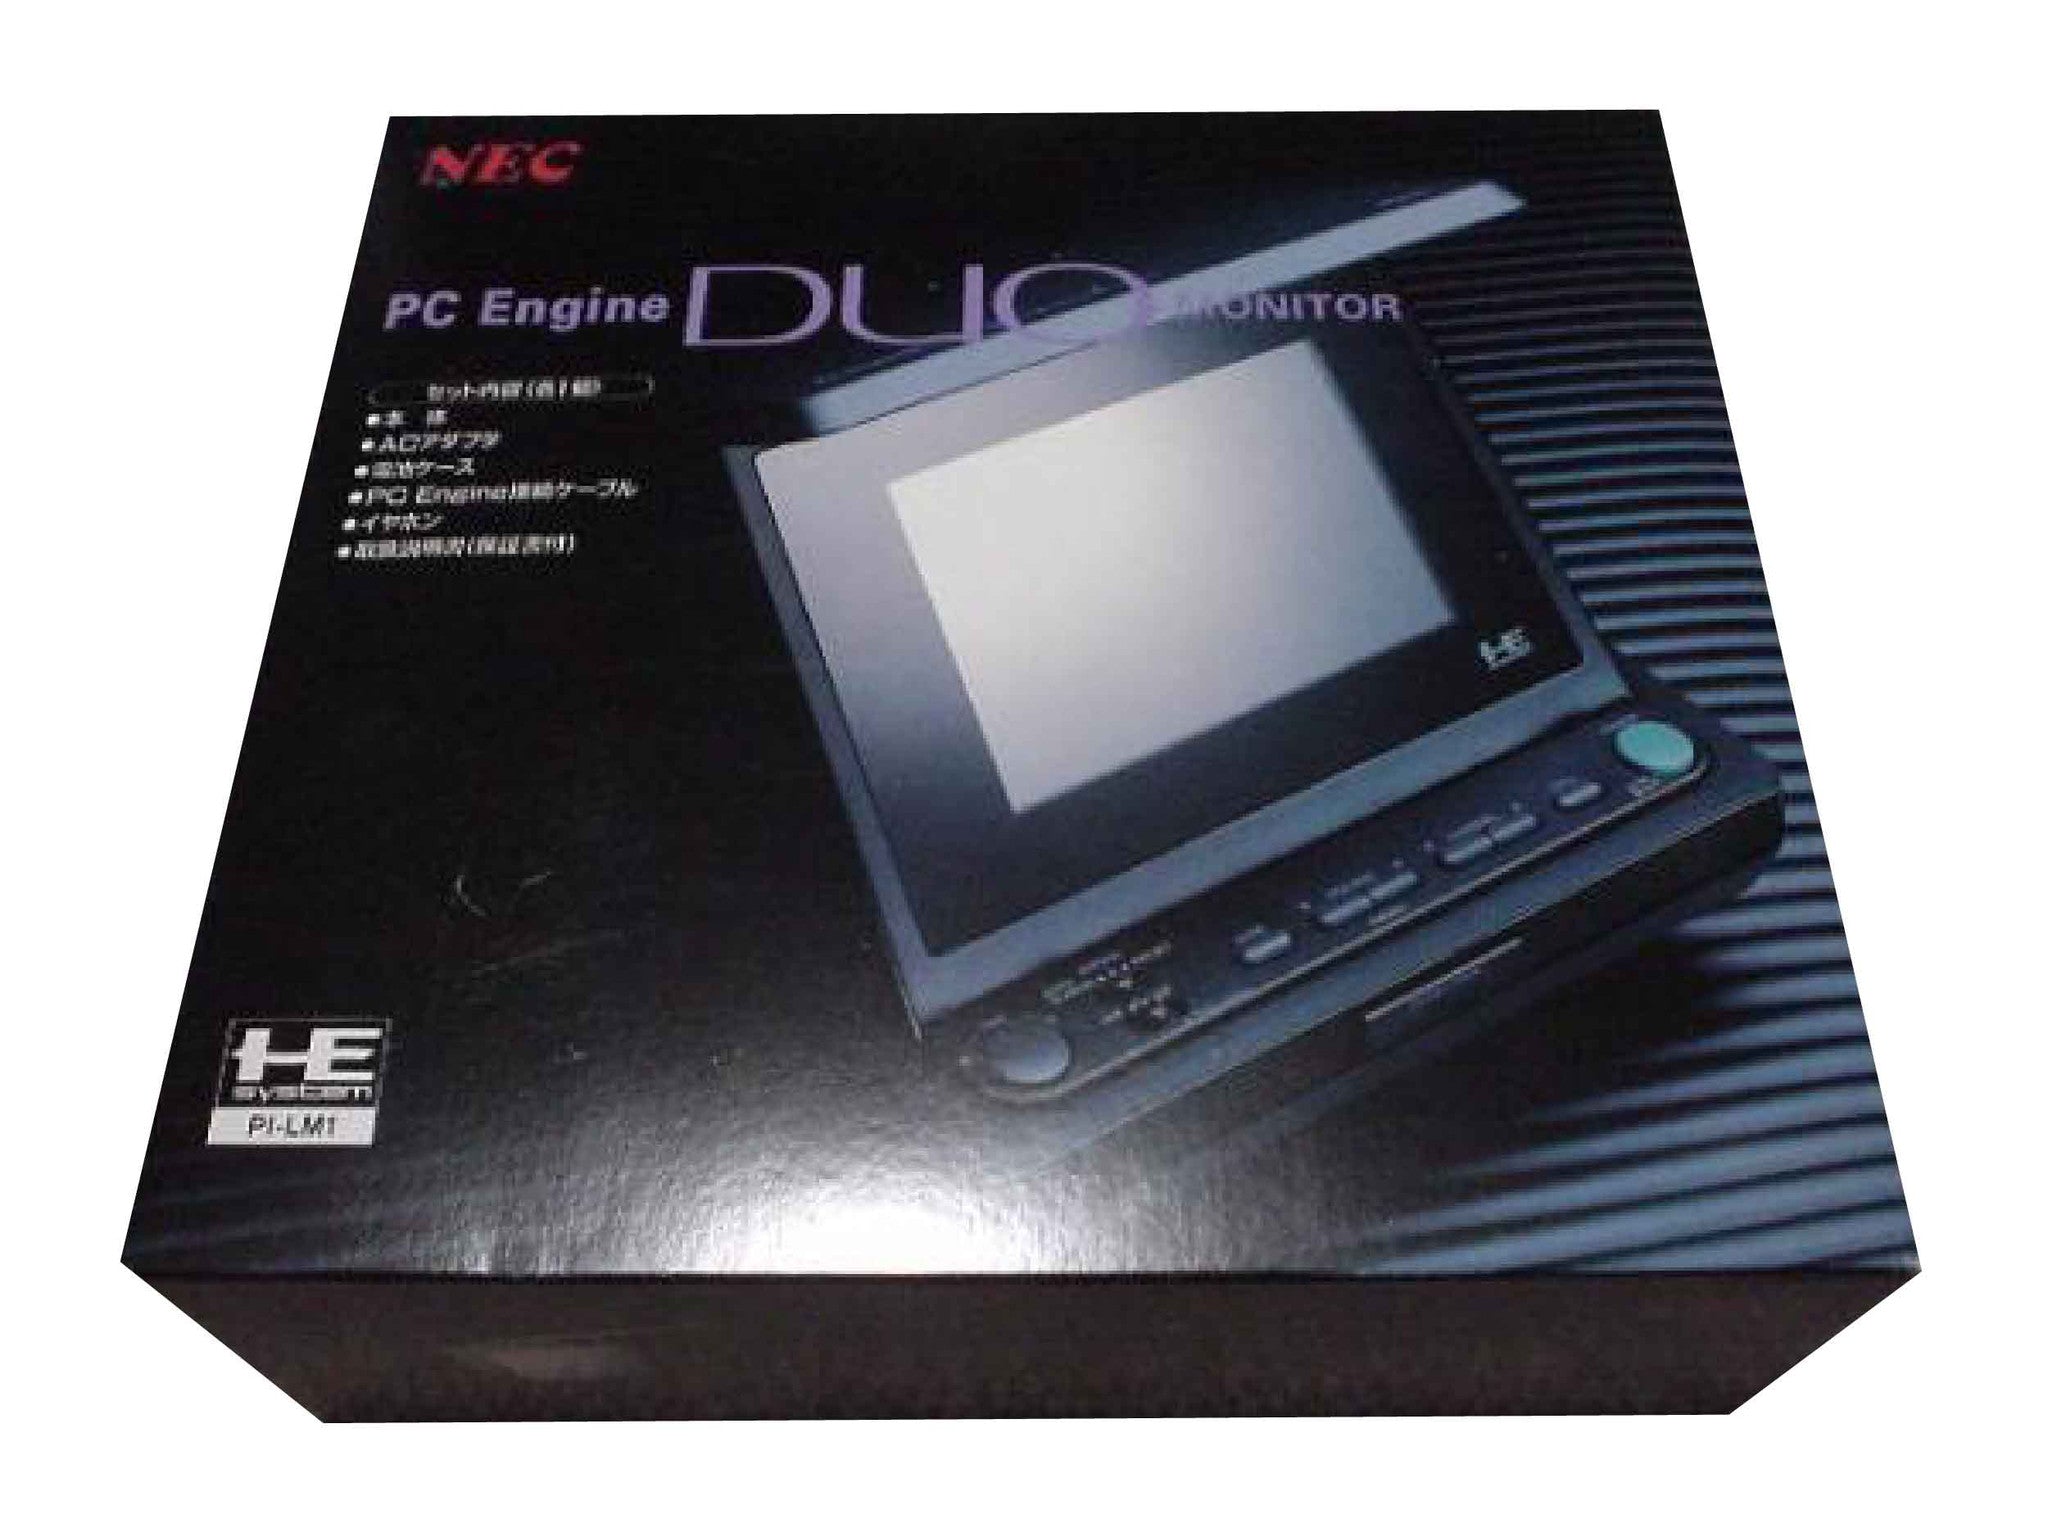 Nec Pc-Engine DUO Monitor Retropixl Retrogaming retro gaming Rare Console Collector Limited Edition Japan Import